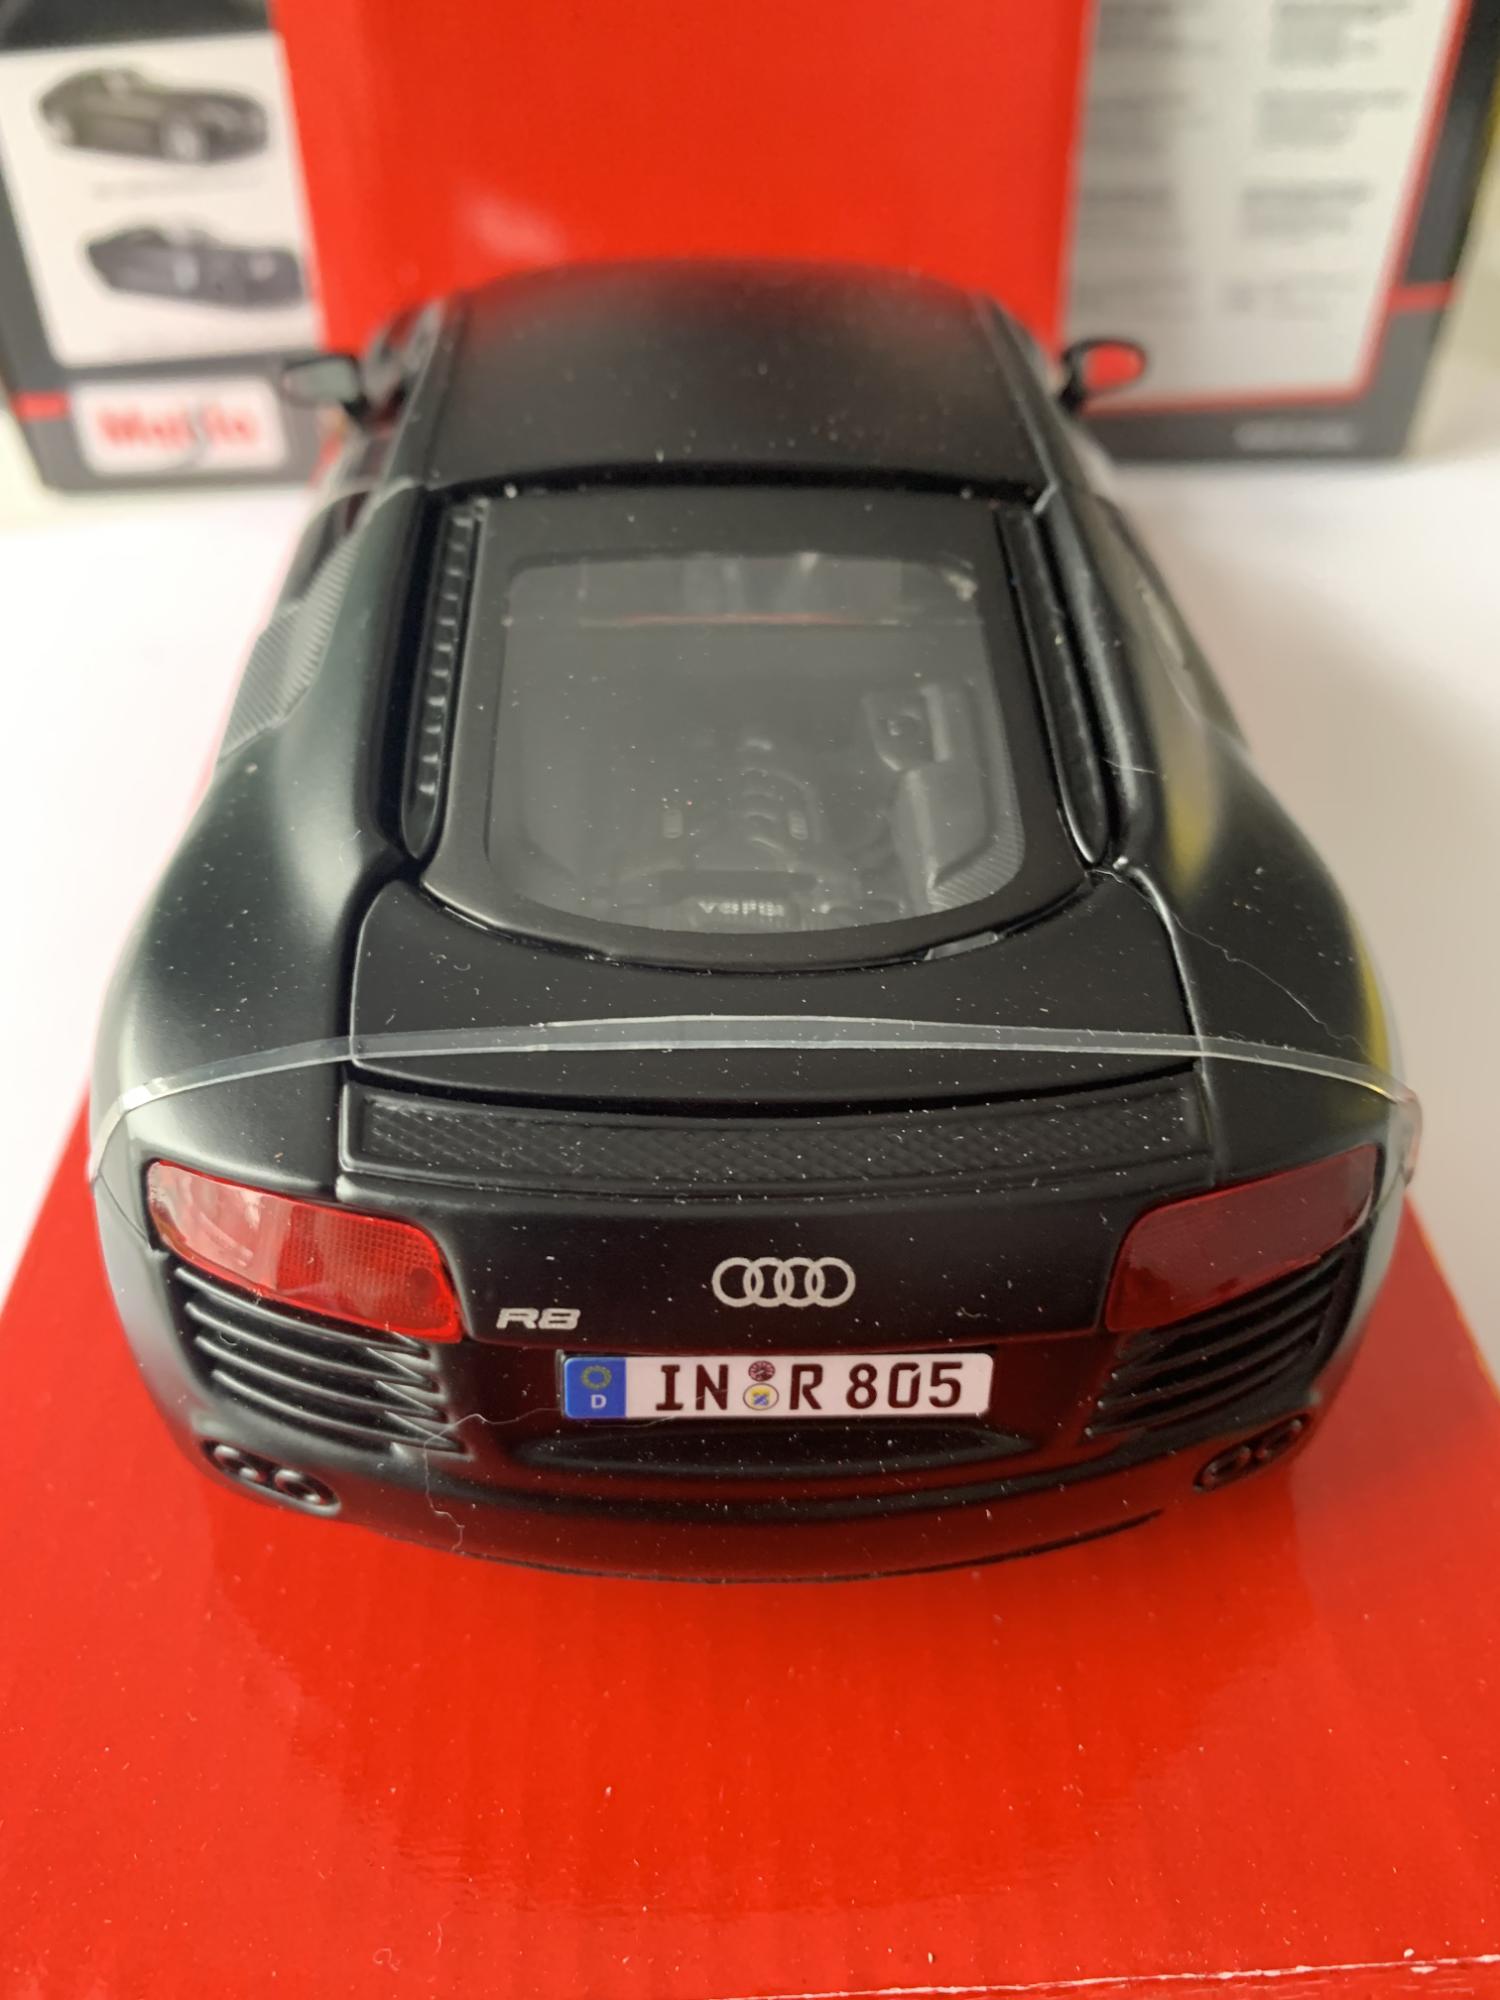 Audi R8 in matt black 1:24 scale model from Maisto